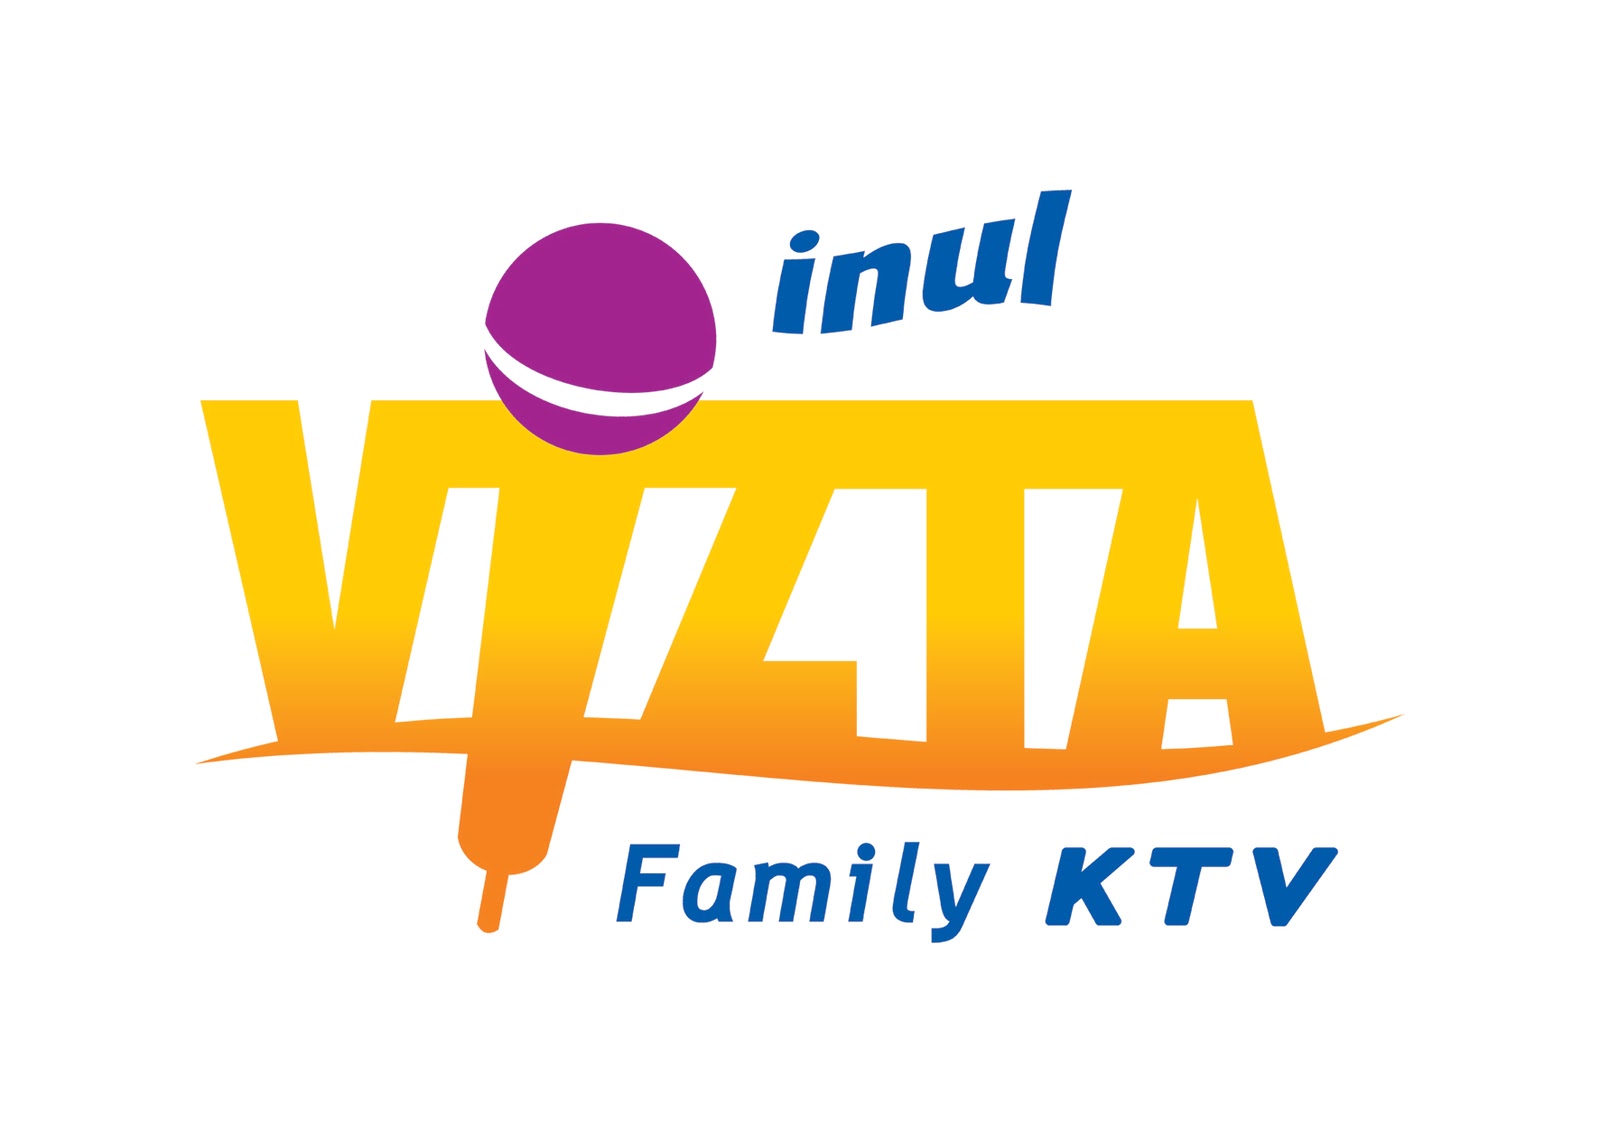 Harga Room Karaoke Inul Vizta Family KTV - Inul Vizta Blog